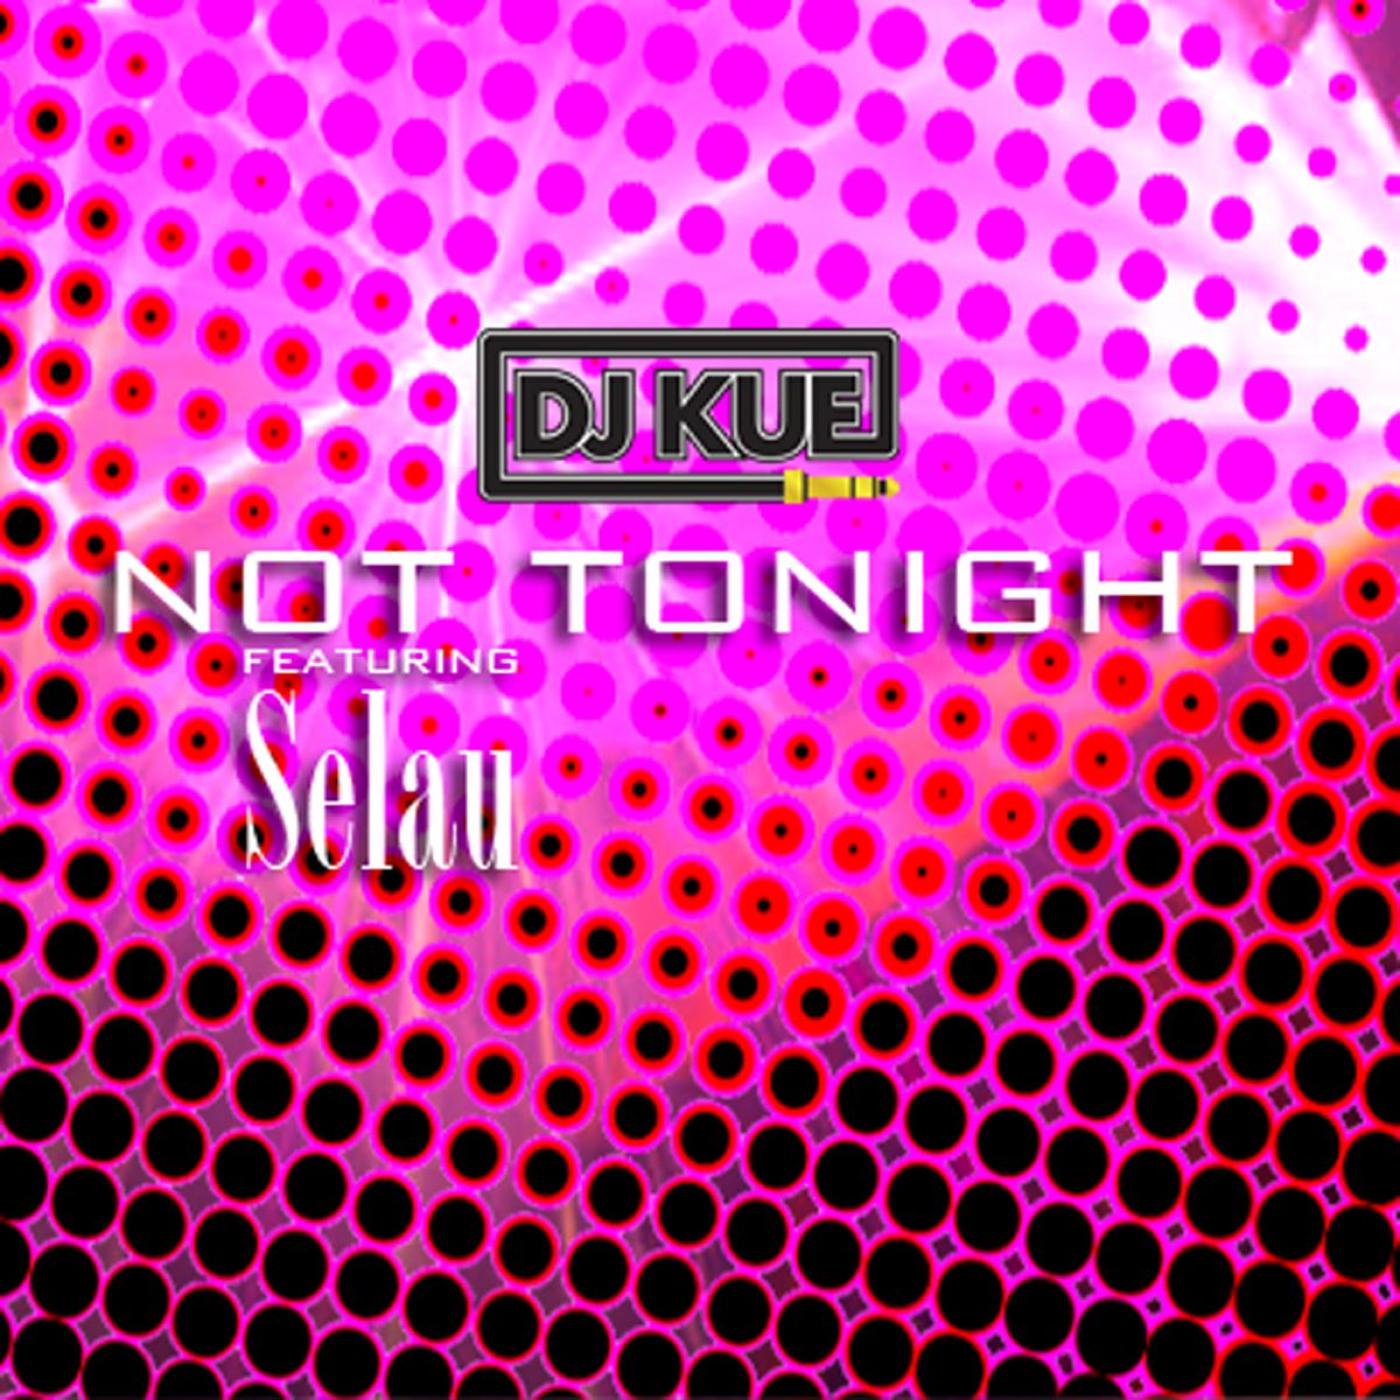 DJ Kue - Not Tonight  [Extended Mix]